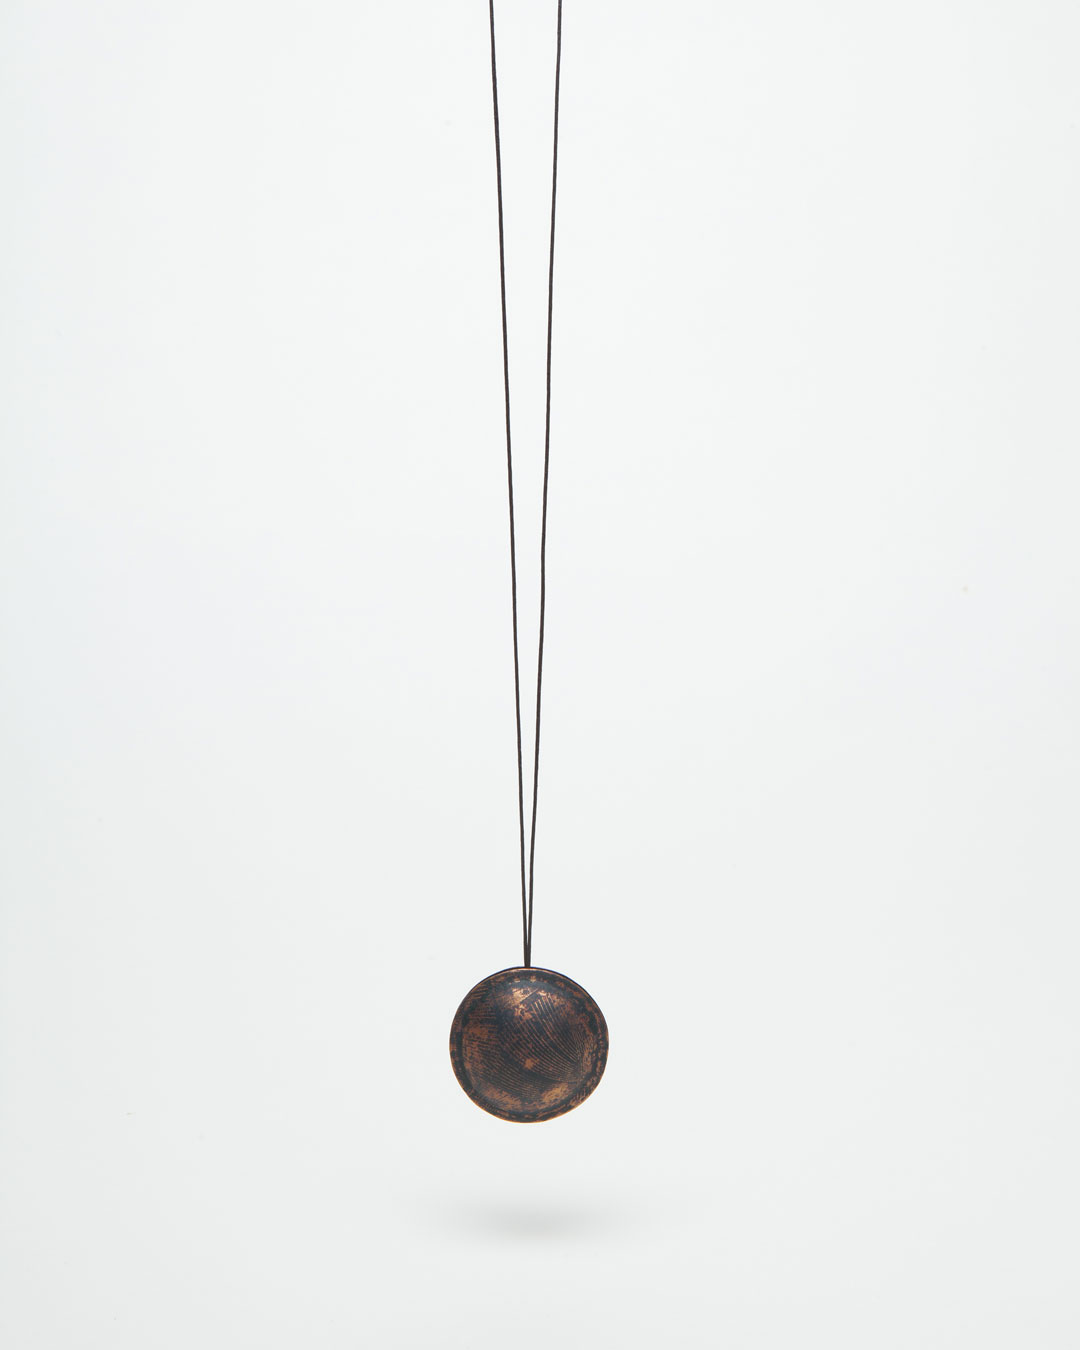 Nicole Beck, Middle One, 2016, pendant; copper, enamel, string, ø 40 mm, €300